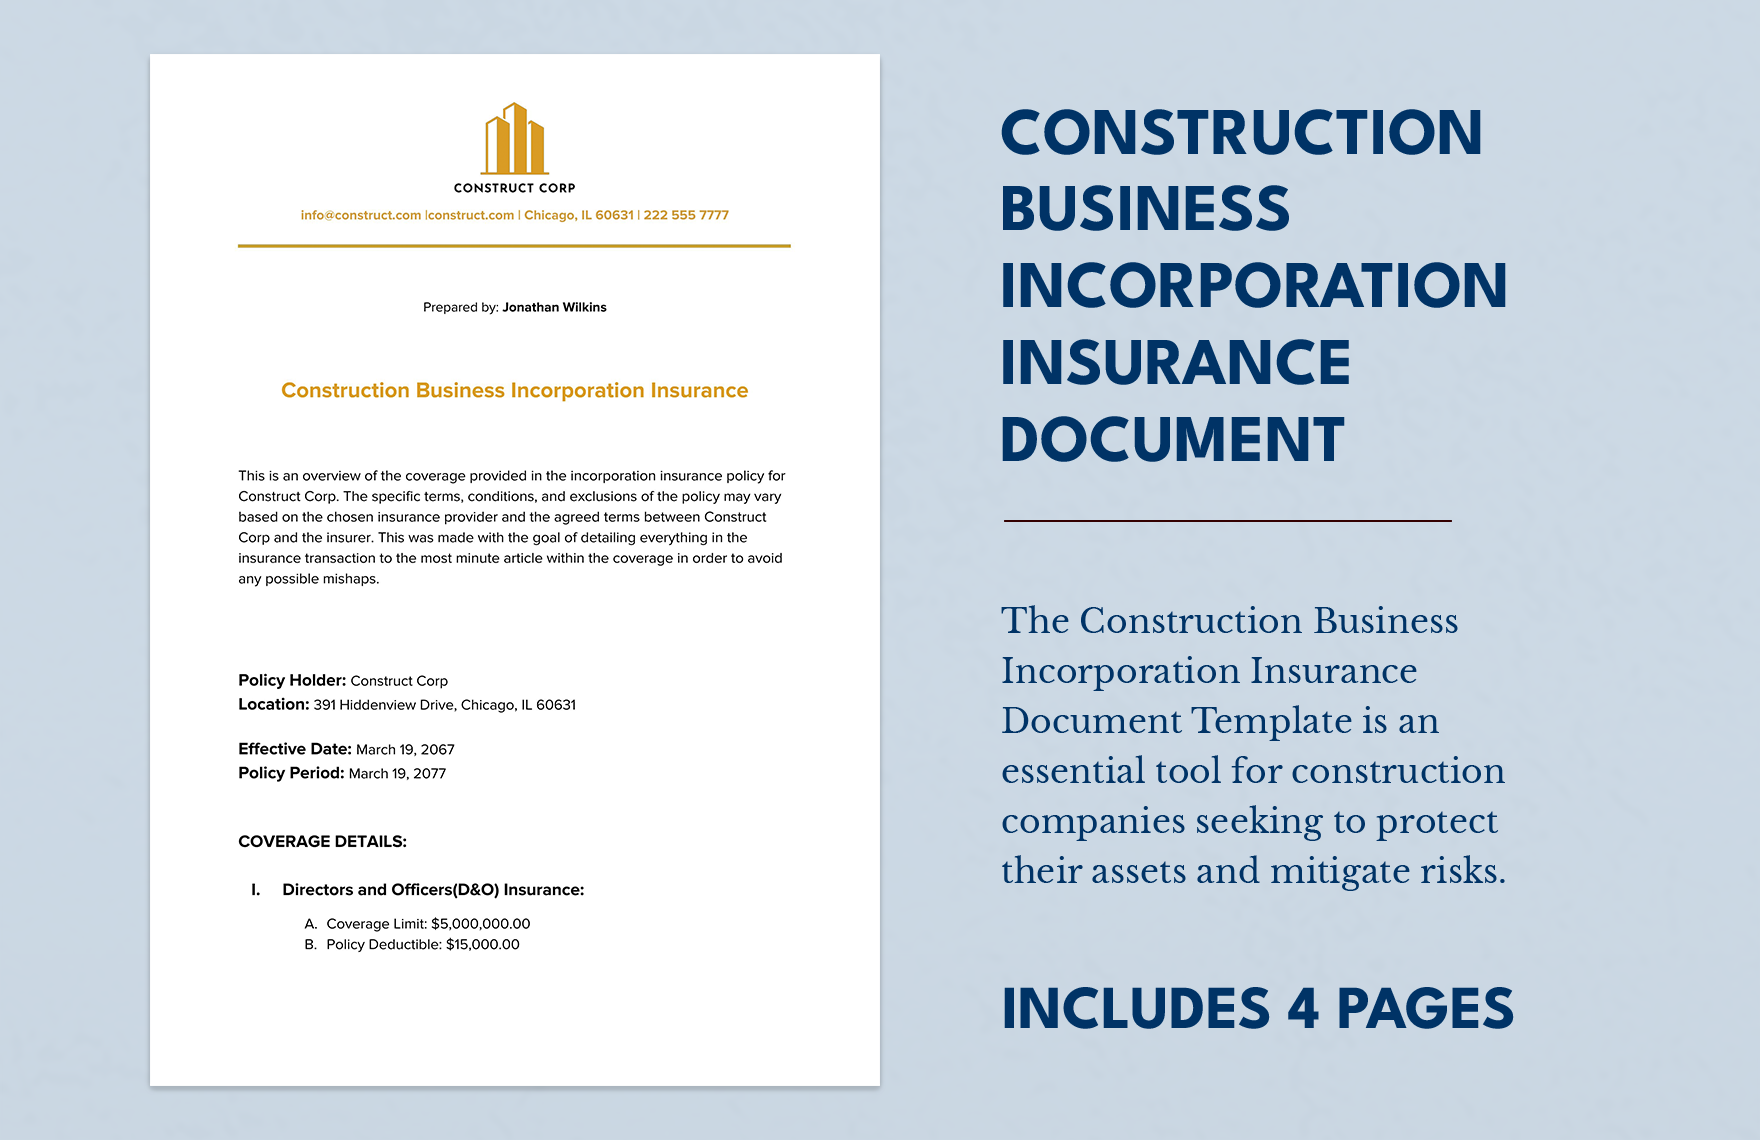 Construction Business Incorporation Insurance Document